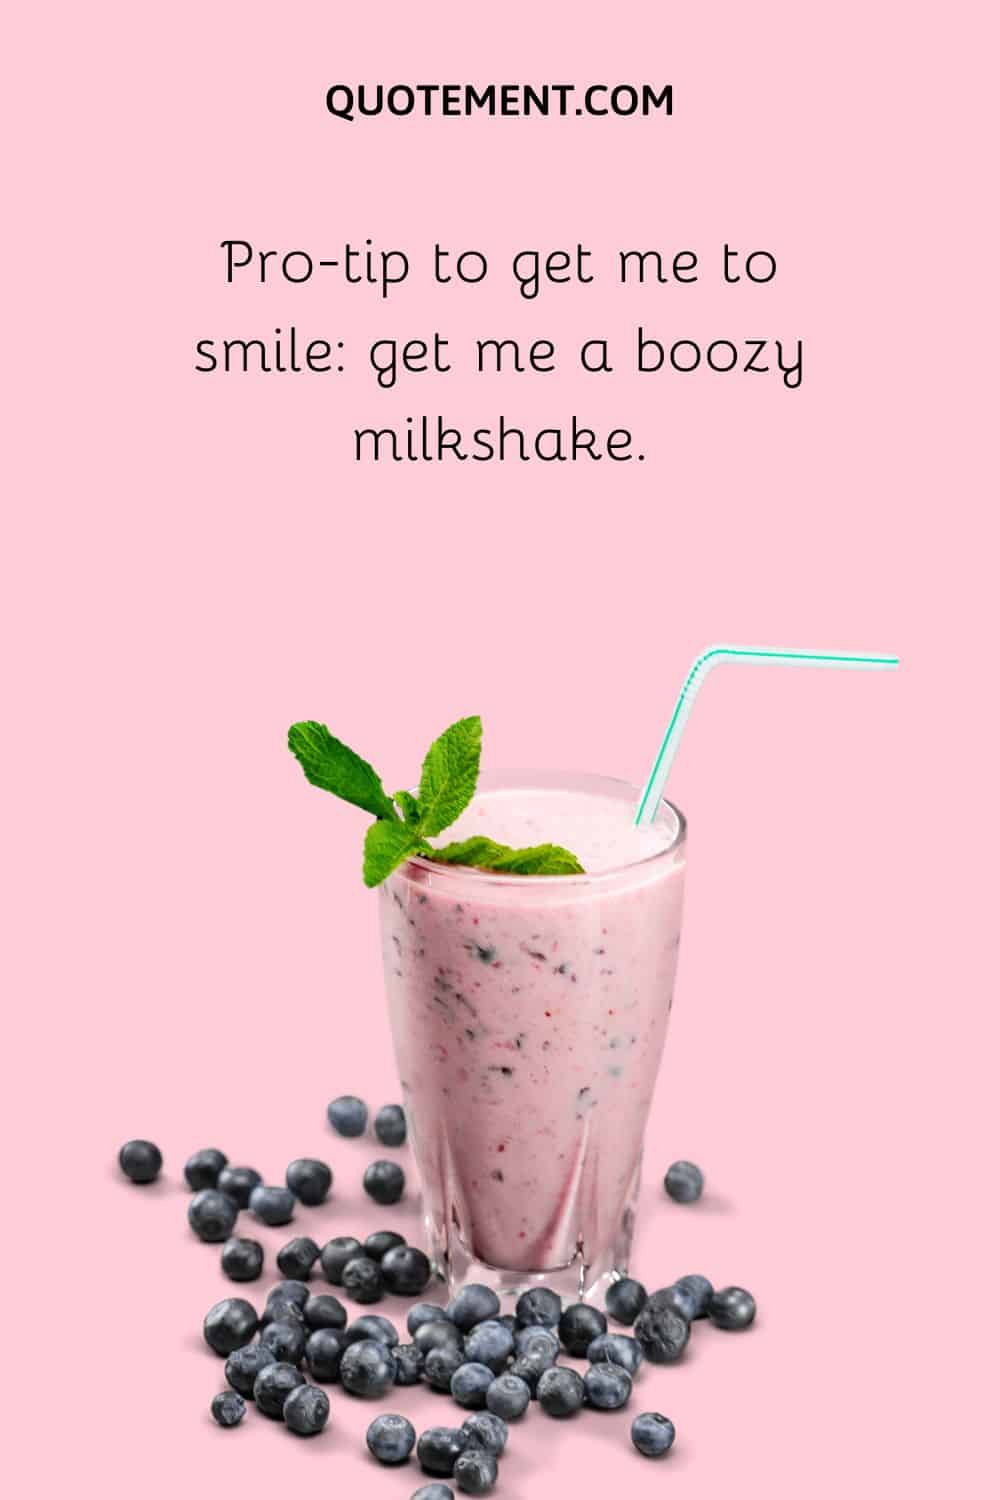 Pro-tip to get me to smile get me a boozy milkshake.